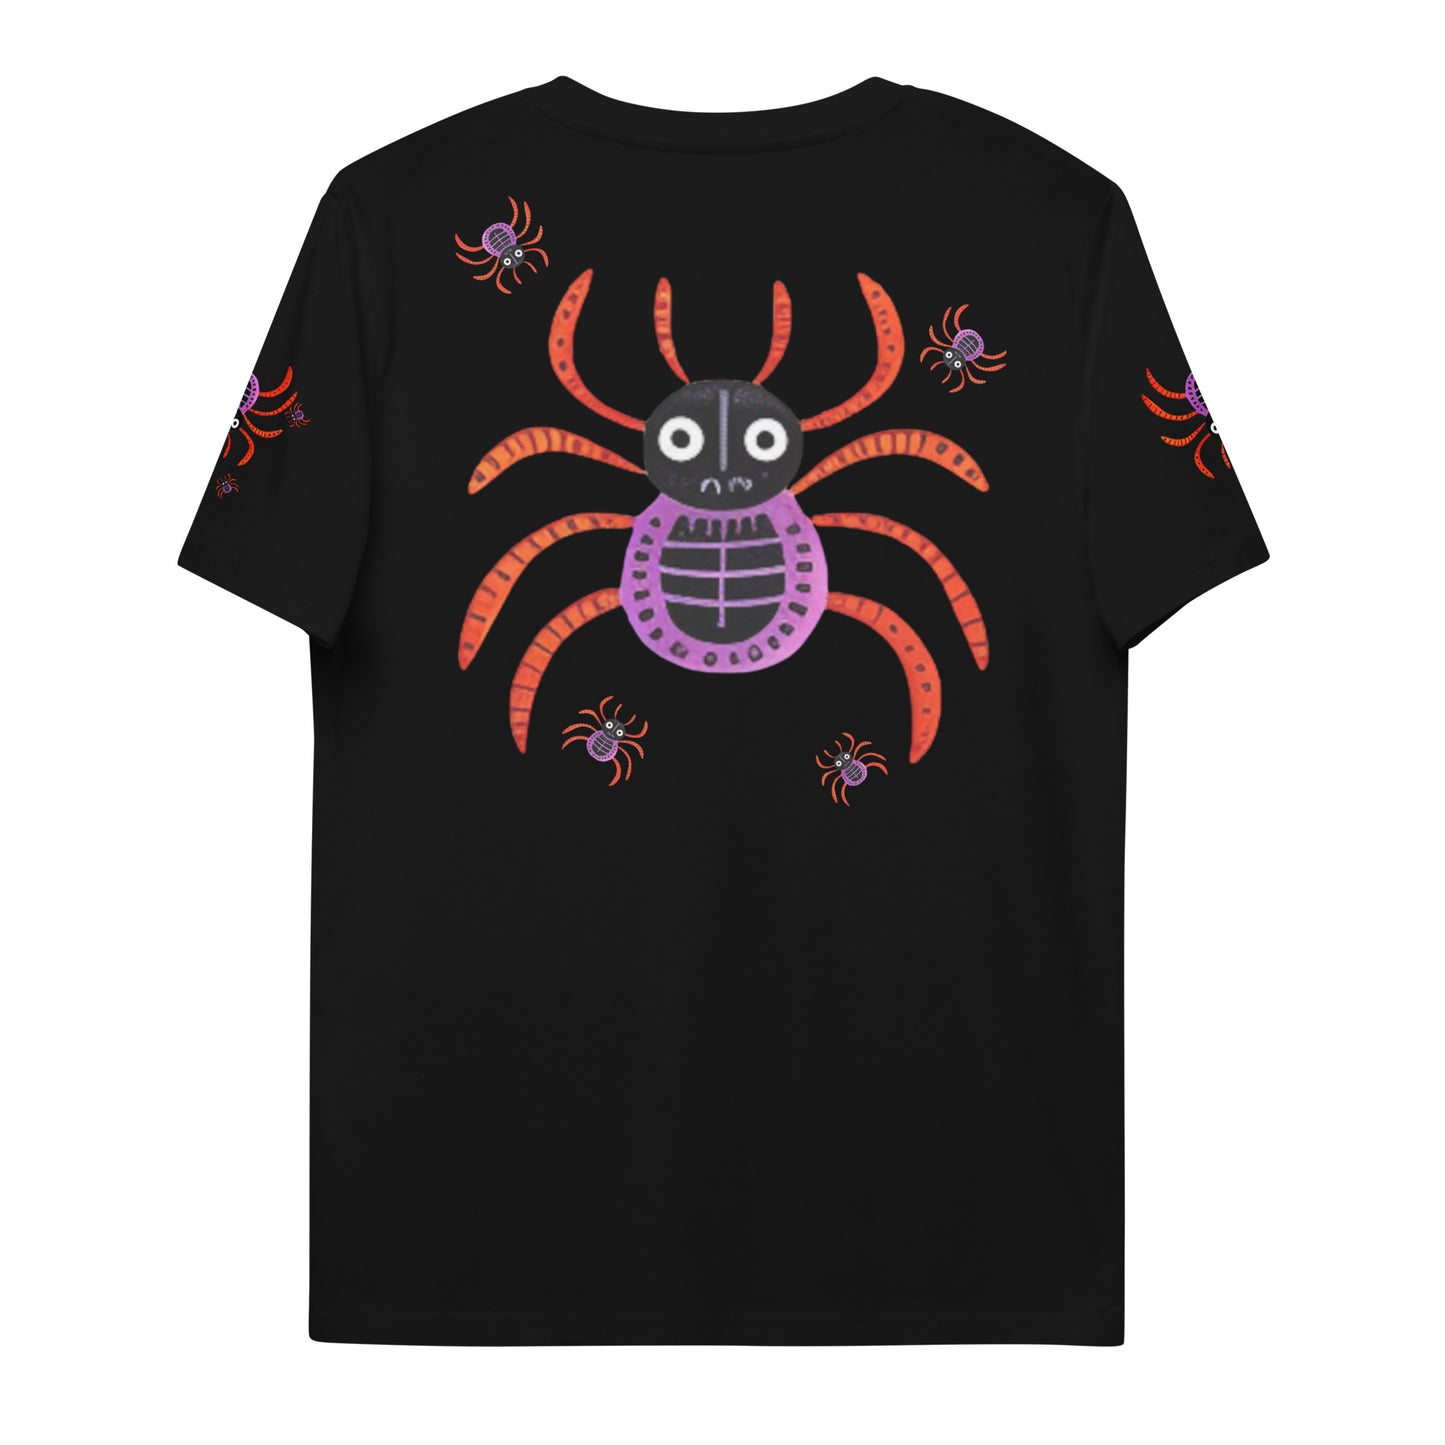 Striped Spider Critter #01 Unisex organic cotton t-shirt